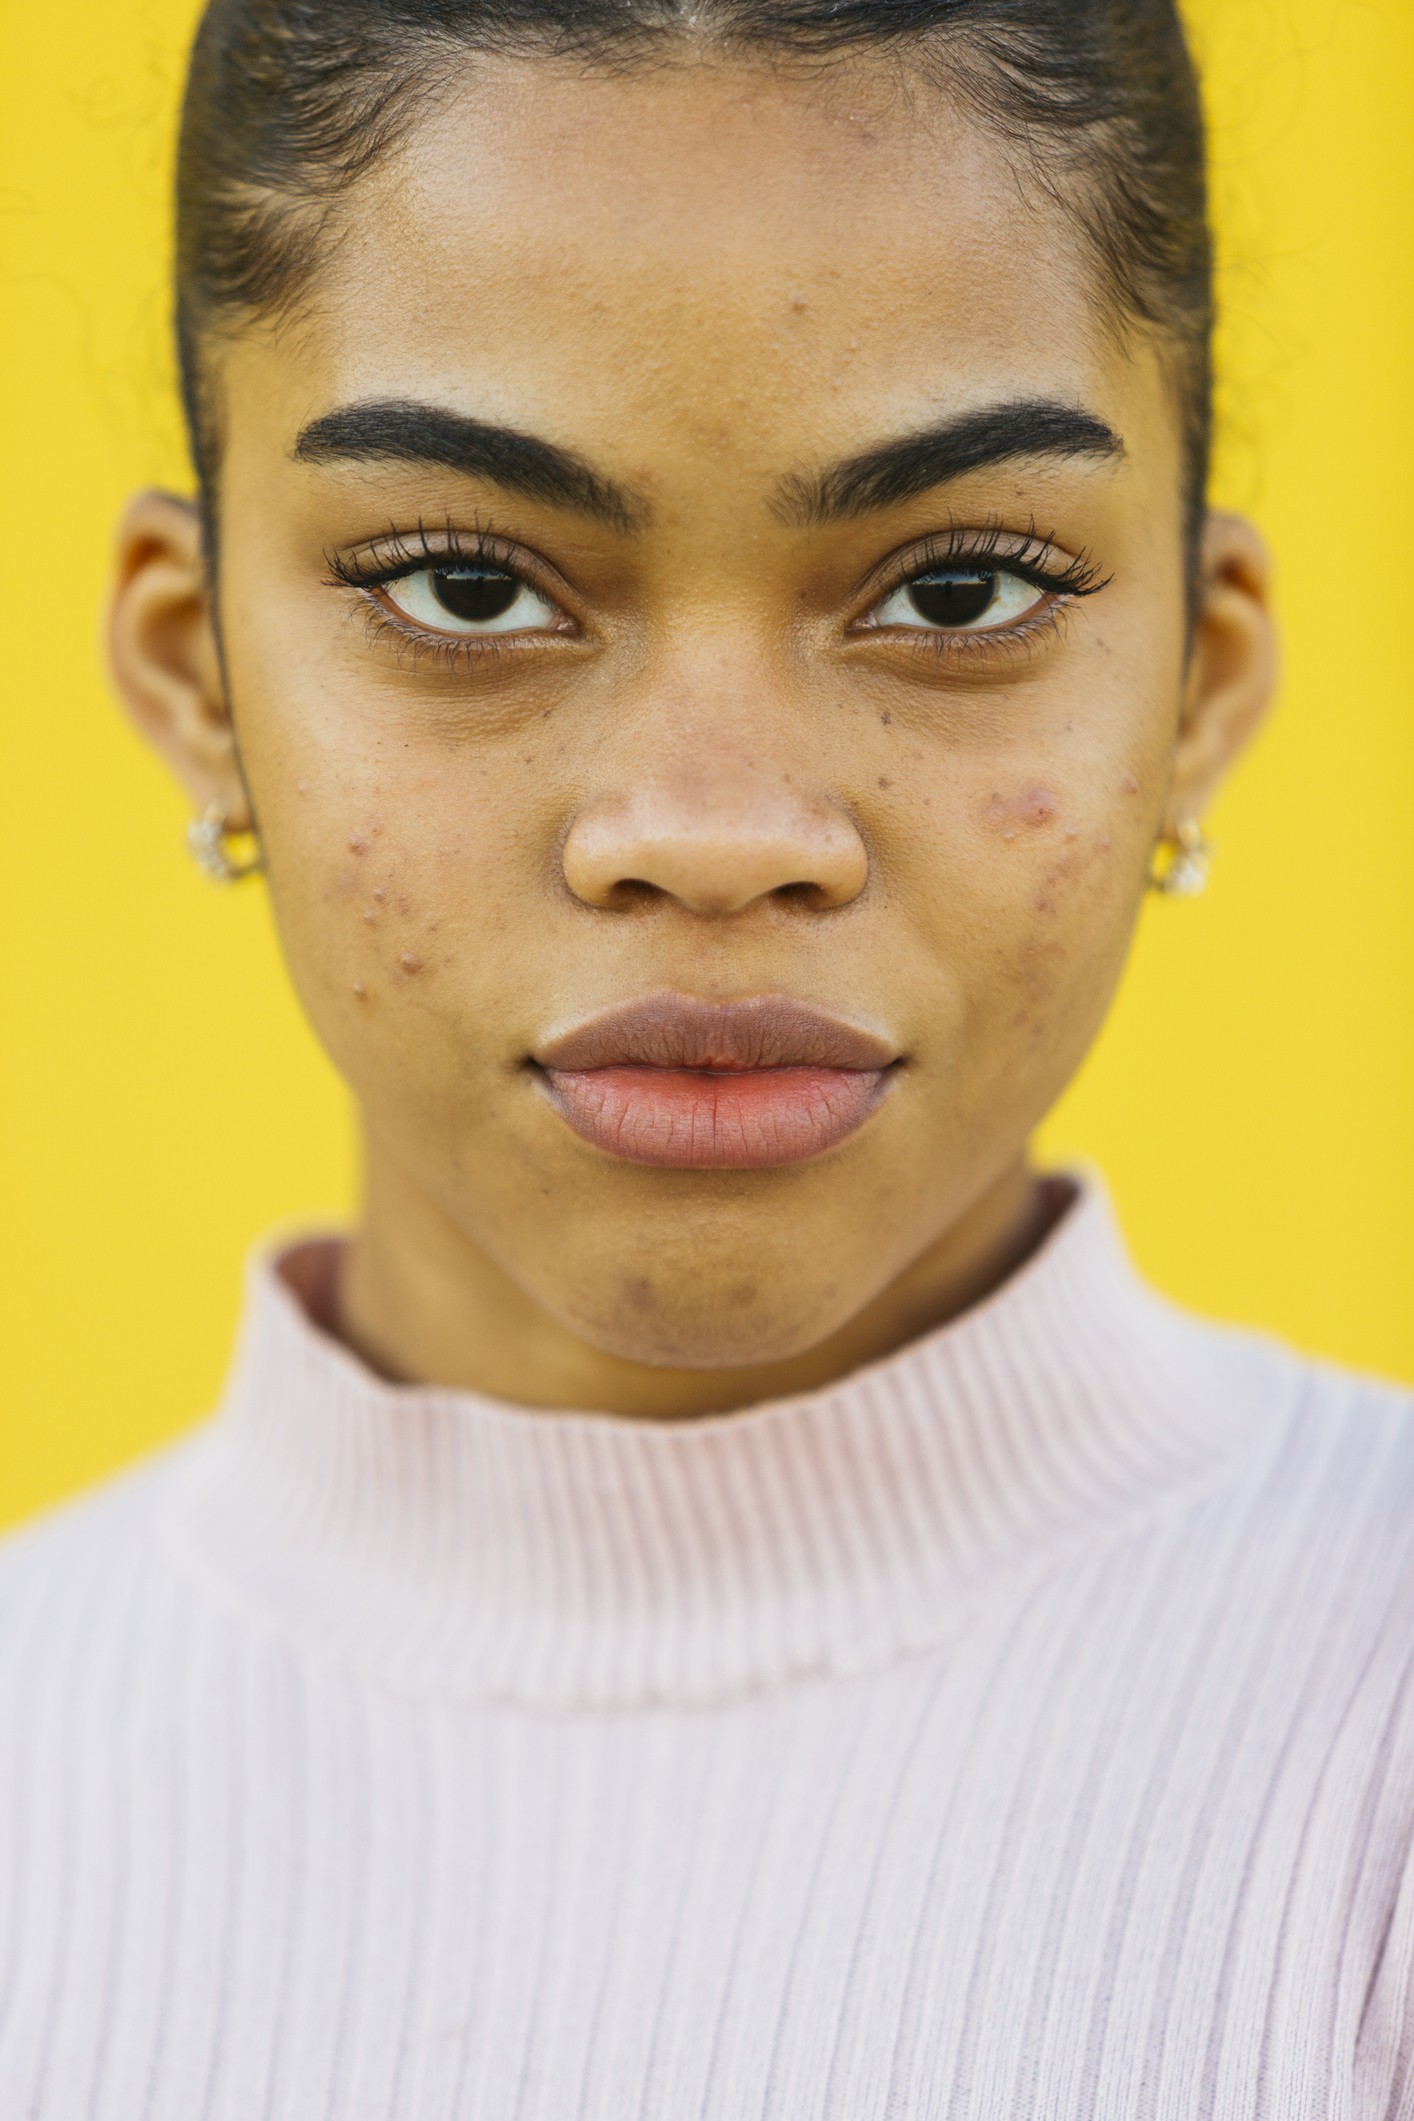 Pandemia na pele: acne adulta (Foto: Getty Images)